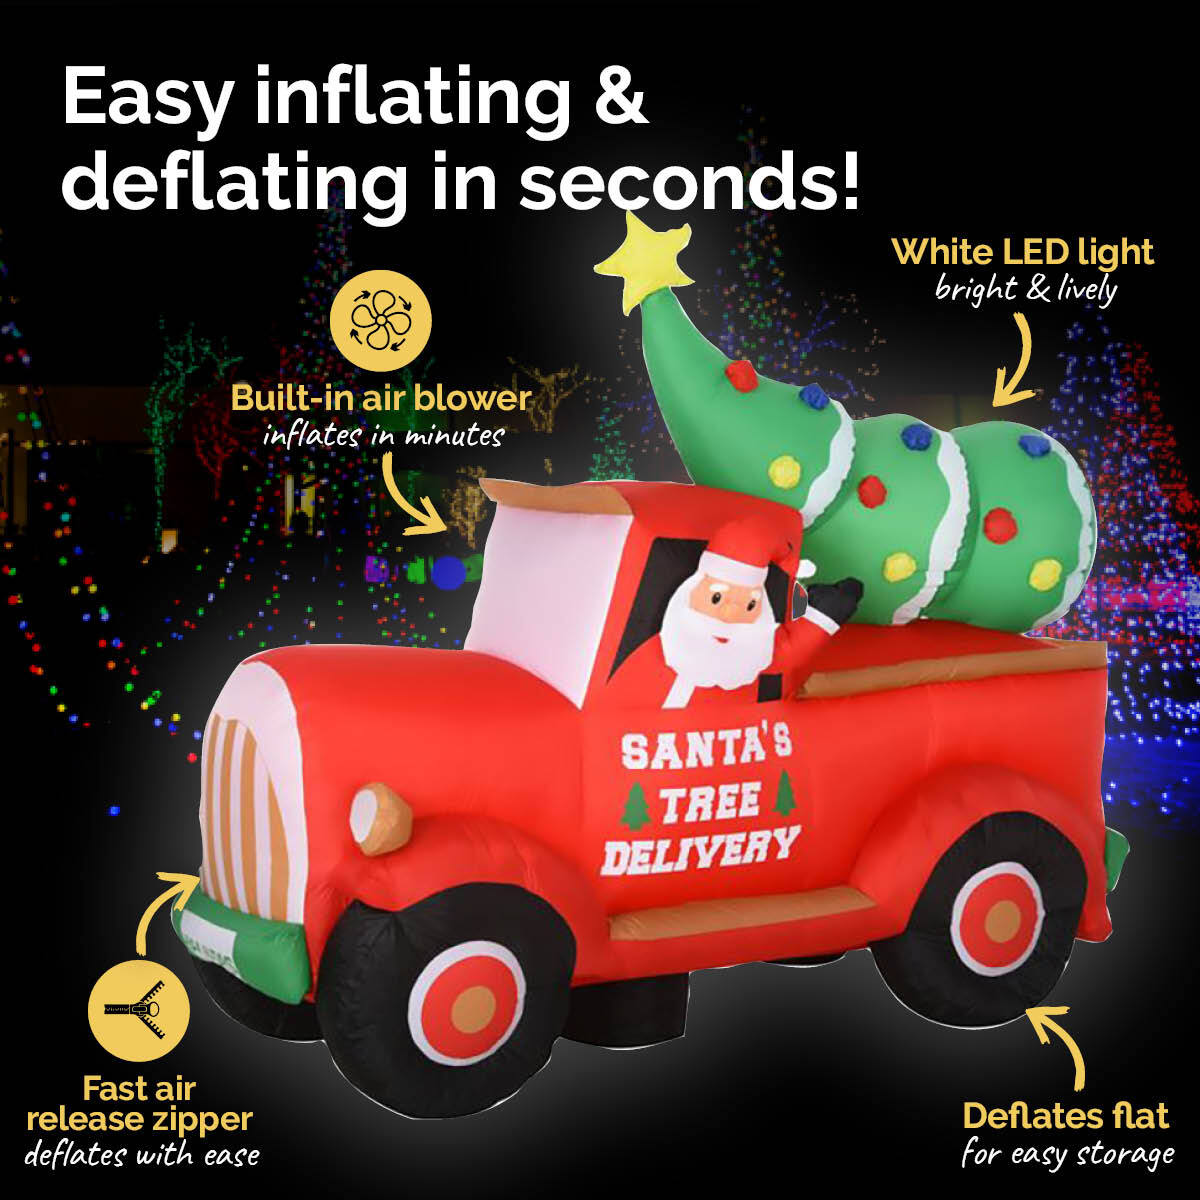 Christmas By Sas 2.25m Santa Ute & Tree Built-In Blower Bright LED Lighting Deals499